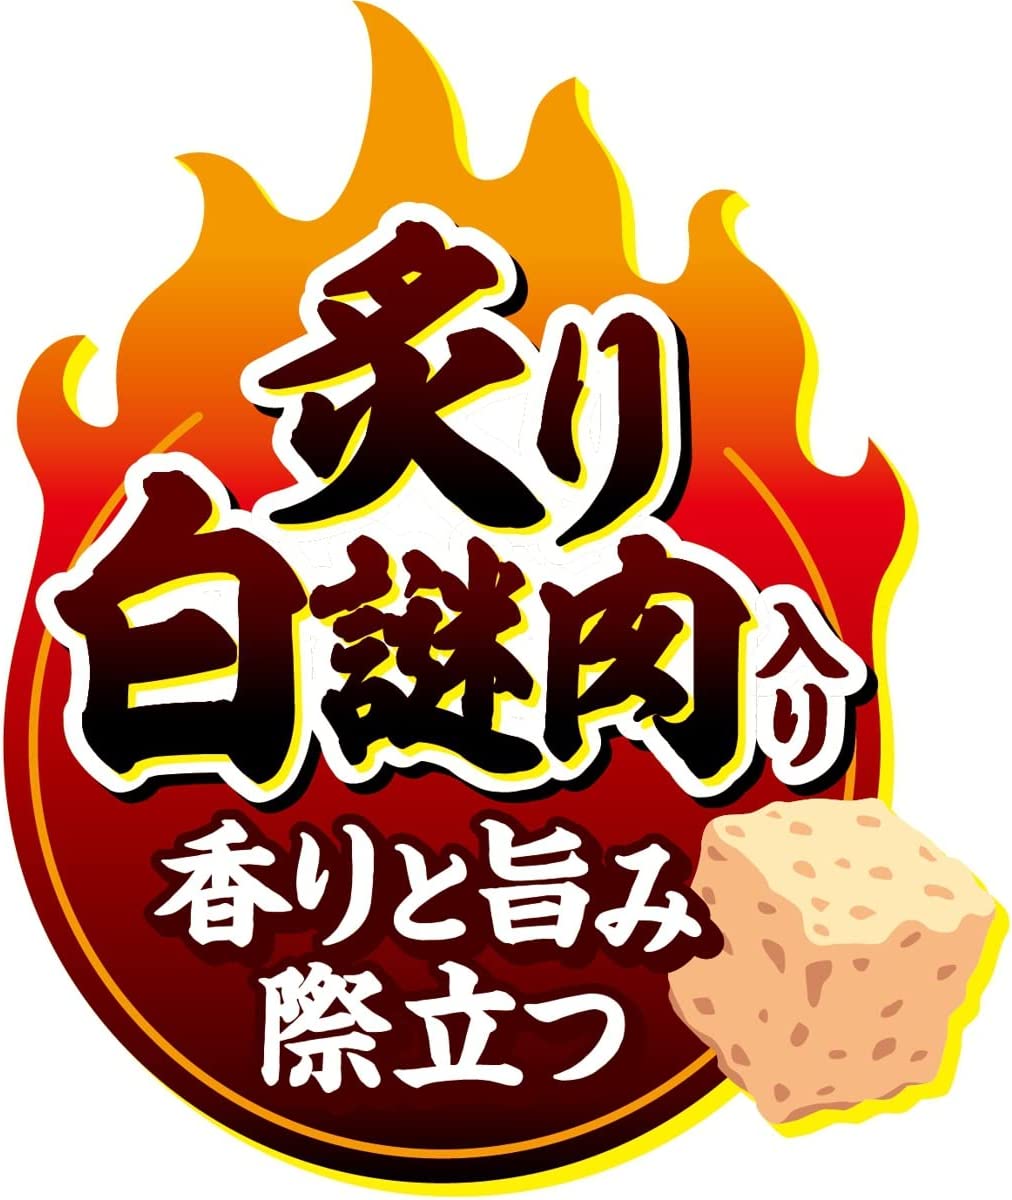 NISSIN Cup Noodle Ramen Salt Chicken Onion Meat Instant Food Soup Japanese 76g